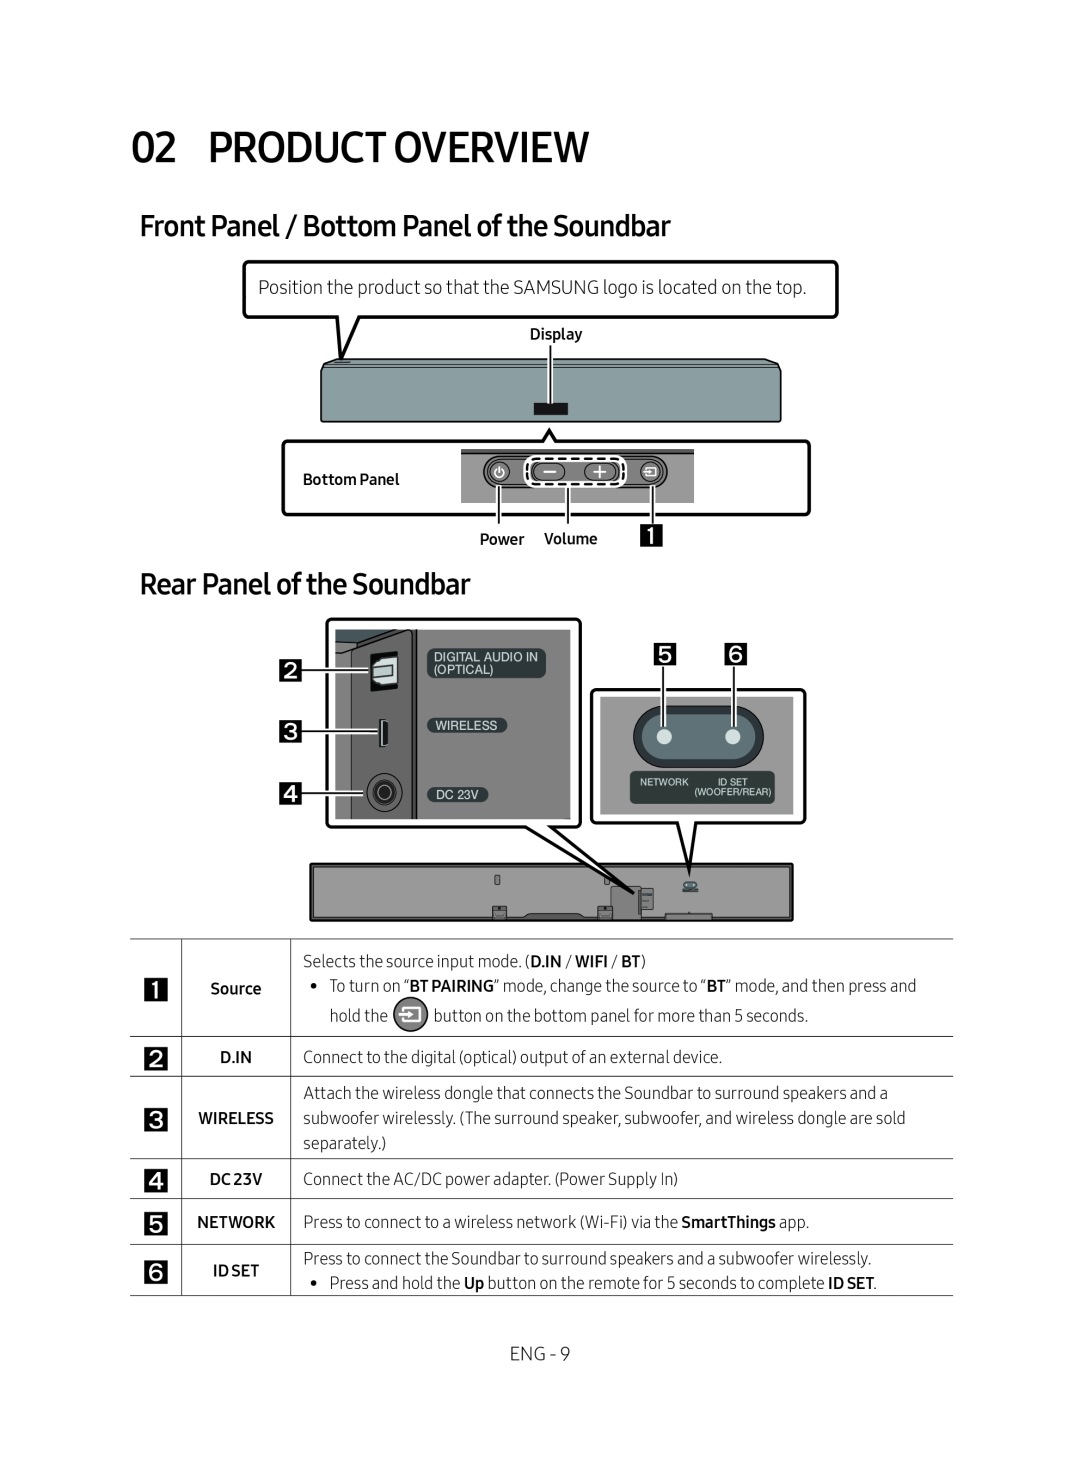 Front Panel / Bottom Panel of the Soundbar Standard HW-NW700